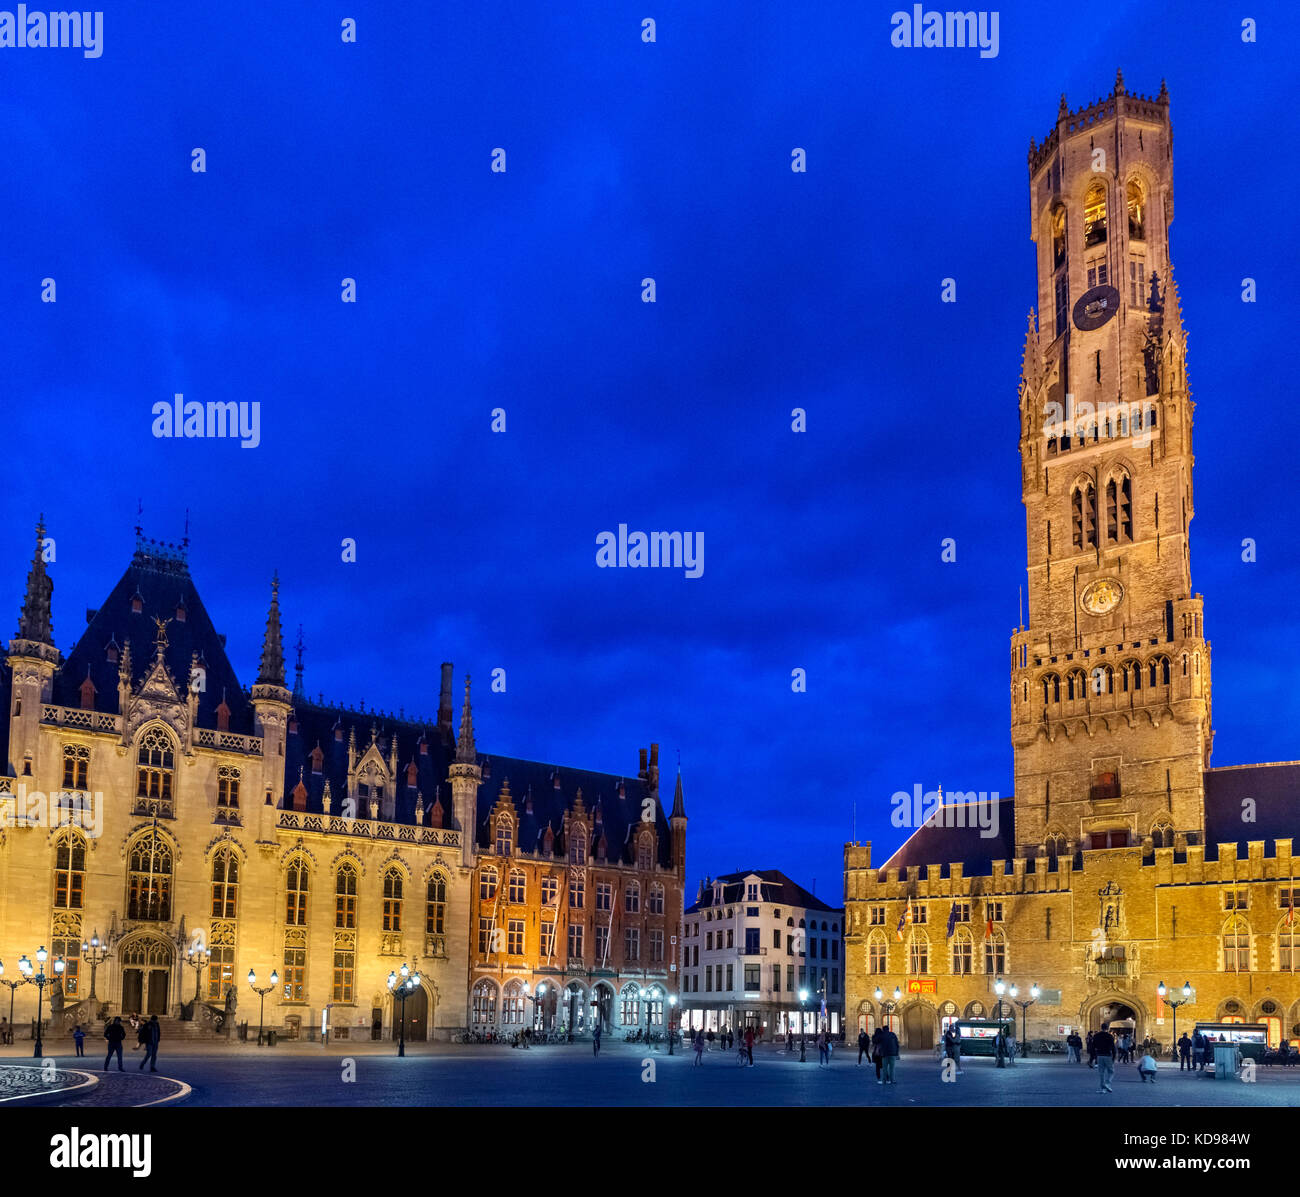 Il campanile di Bruges (Belfort van Brugge) e Provinciaal Hof (Tribunale provinciale), la Piazza del Mercato (Markt), Bruges (Brugge), Belgio Foto Stock